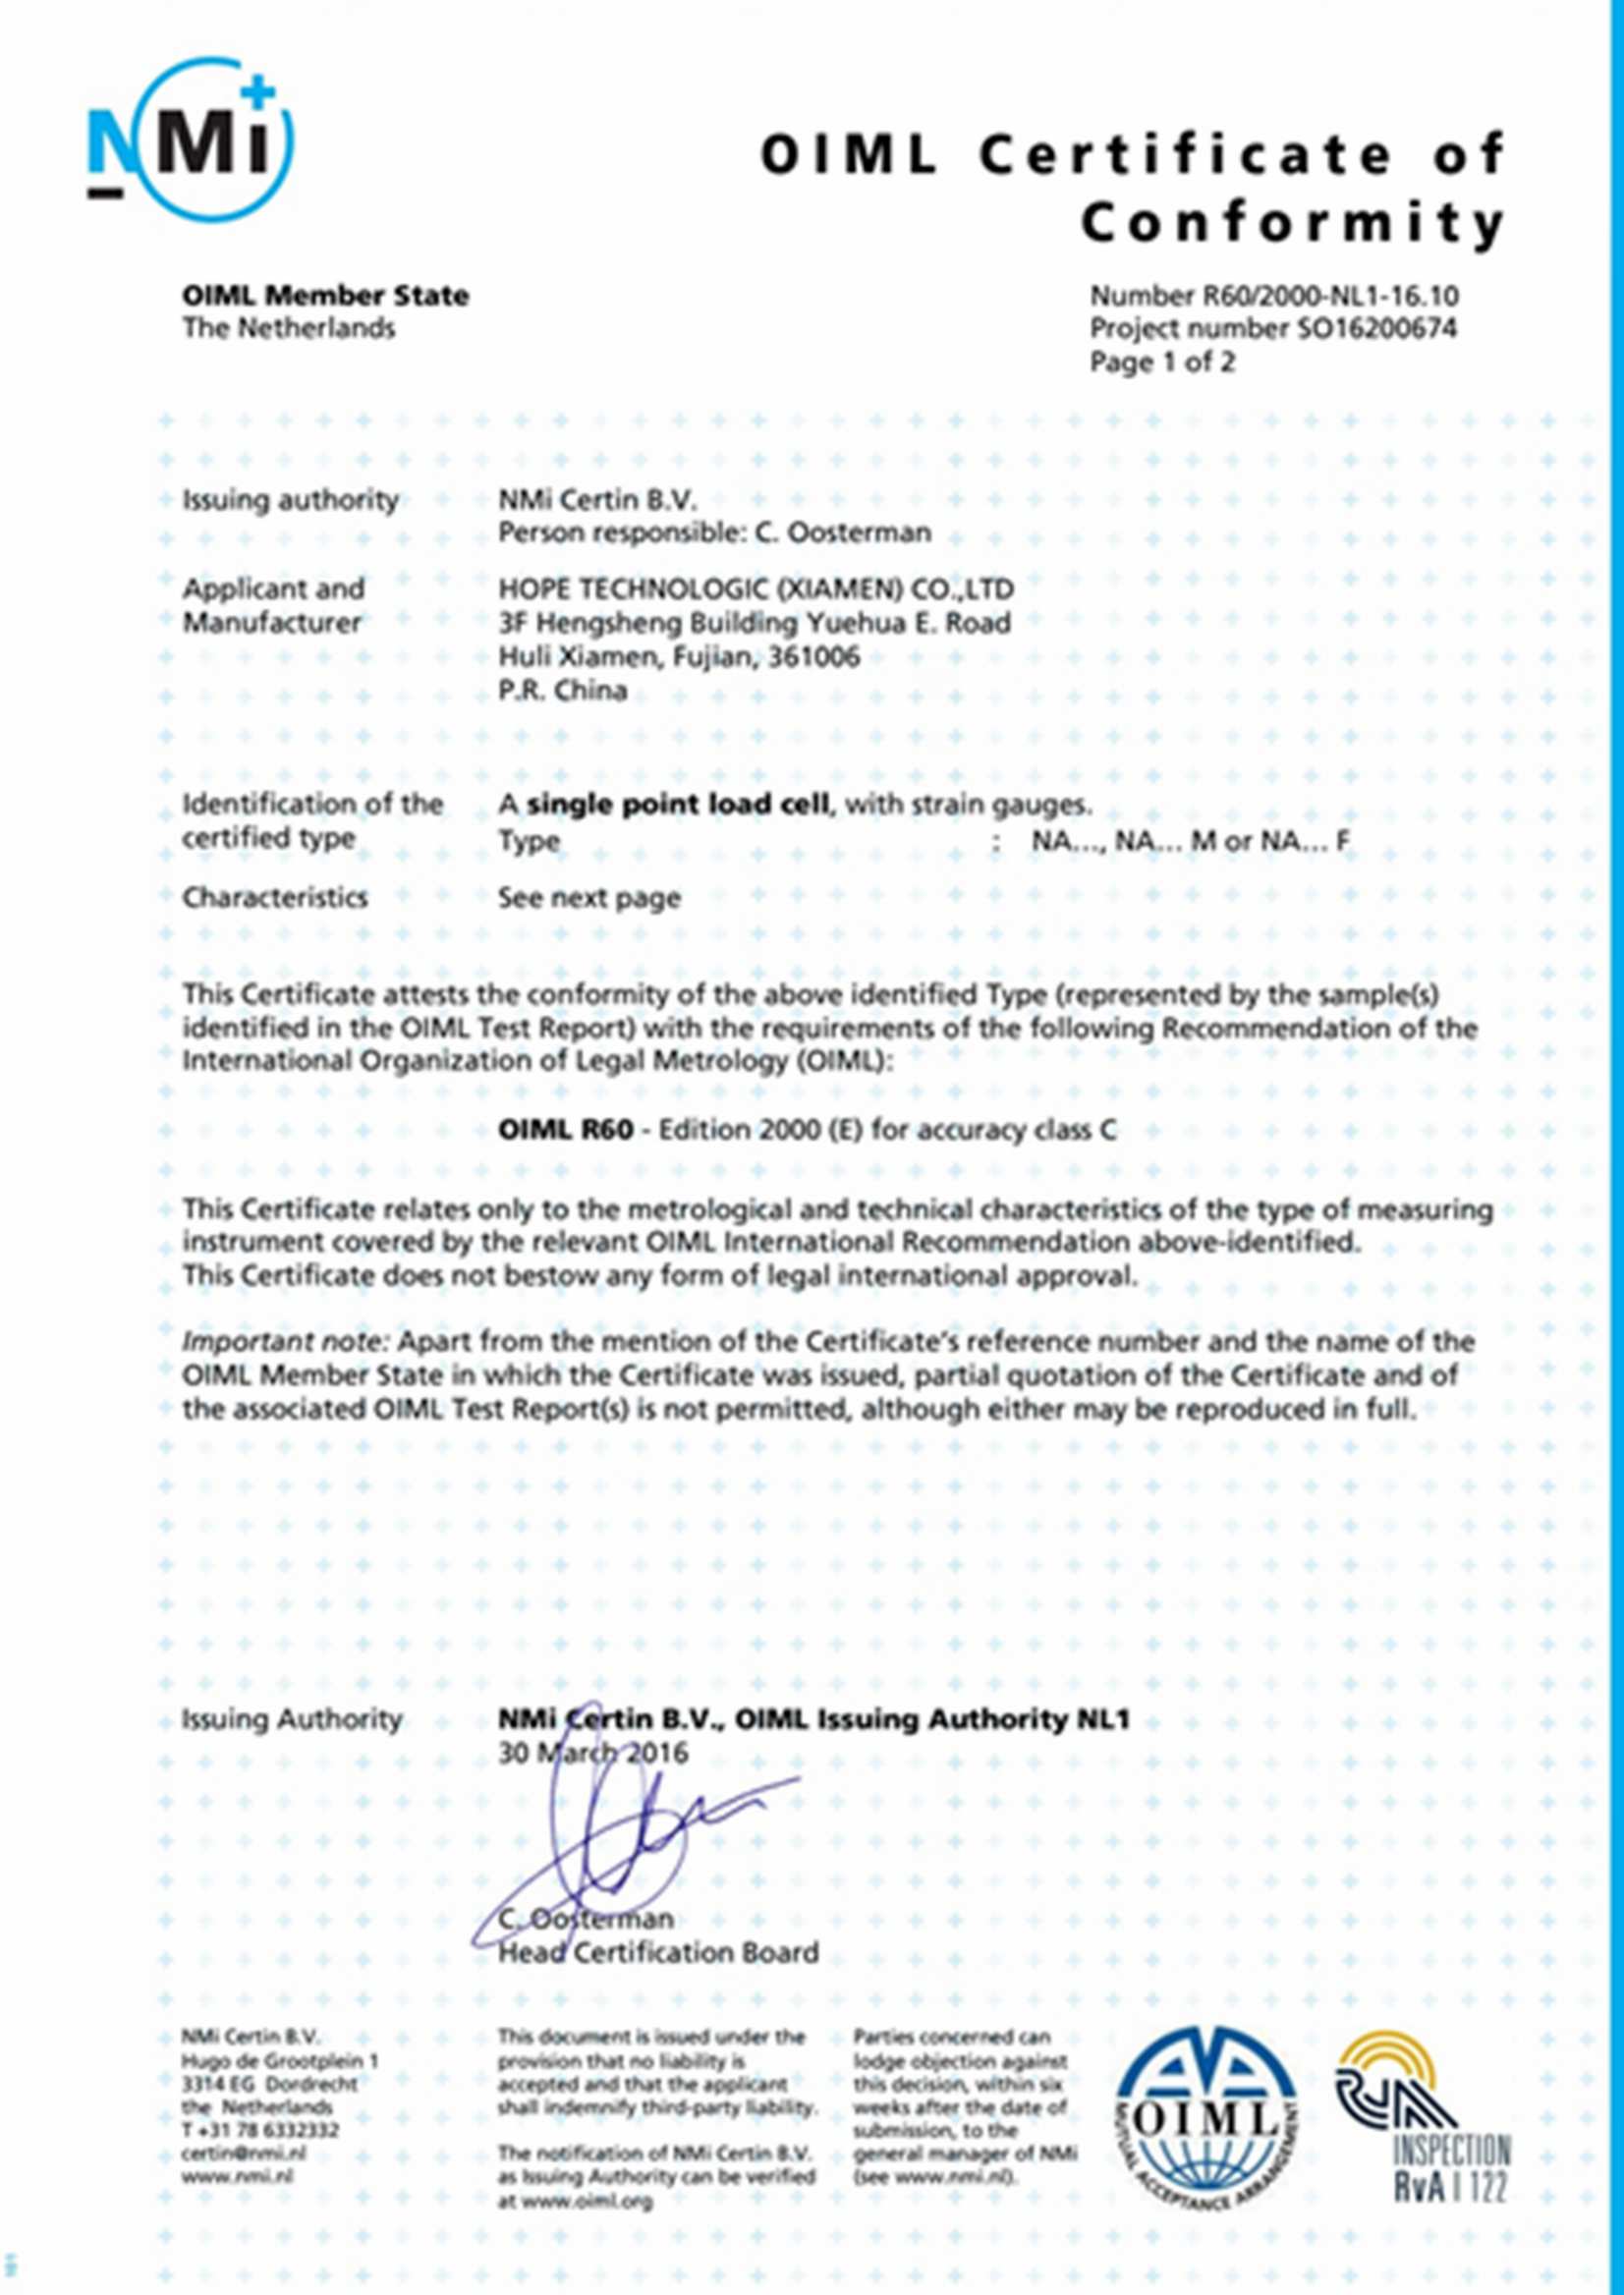 NA series OIML Certificate